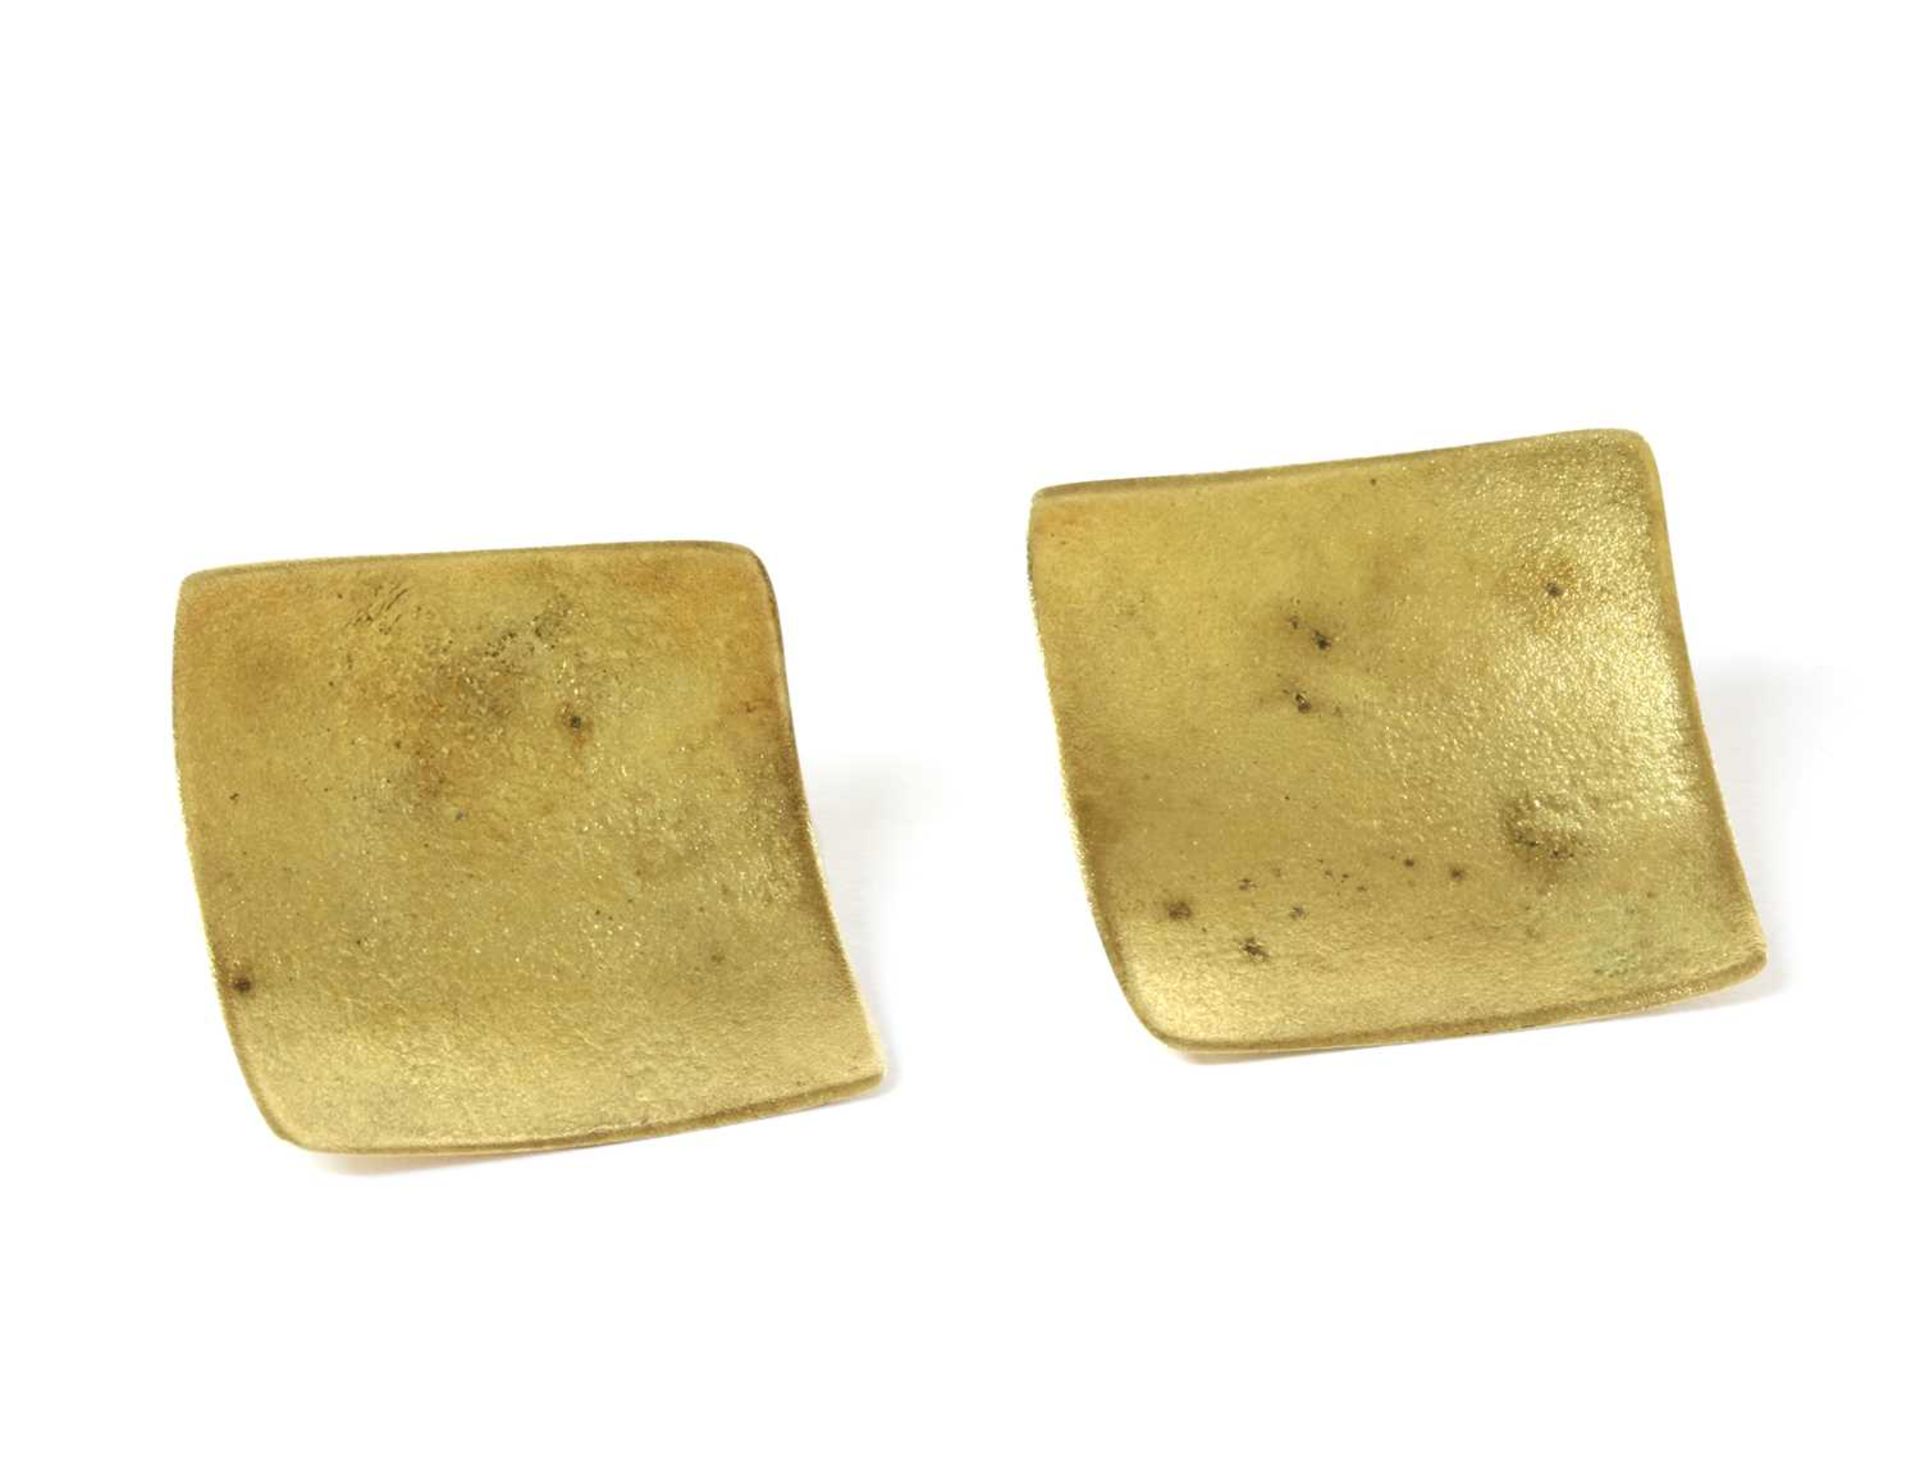 A pair of gold stud earrings,